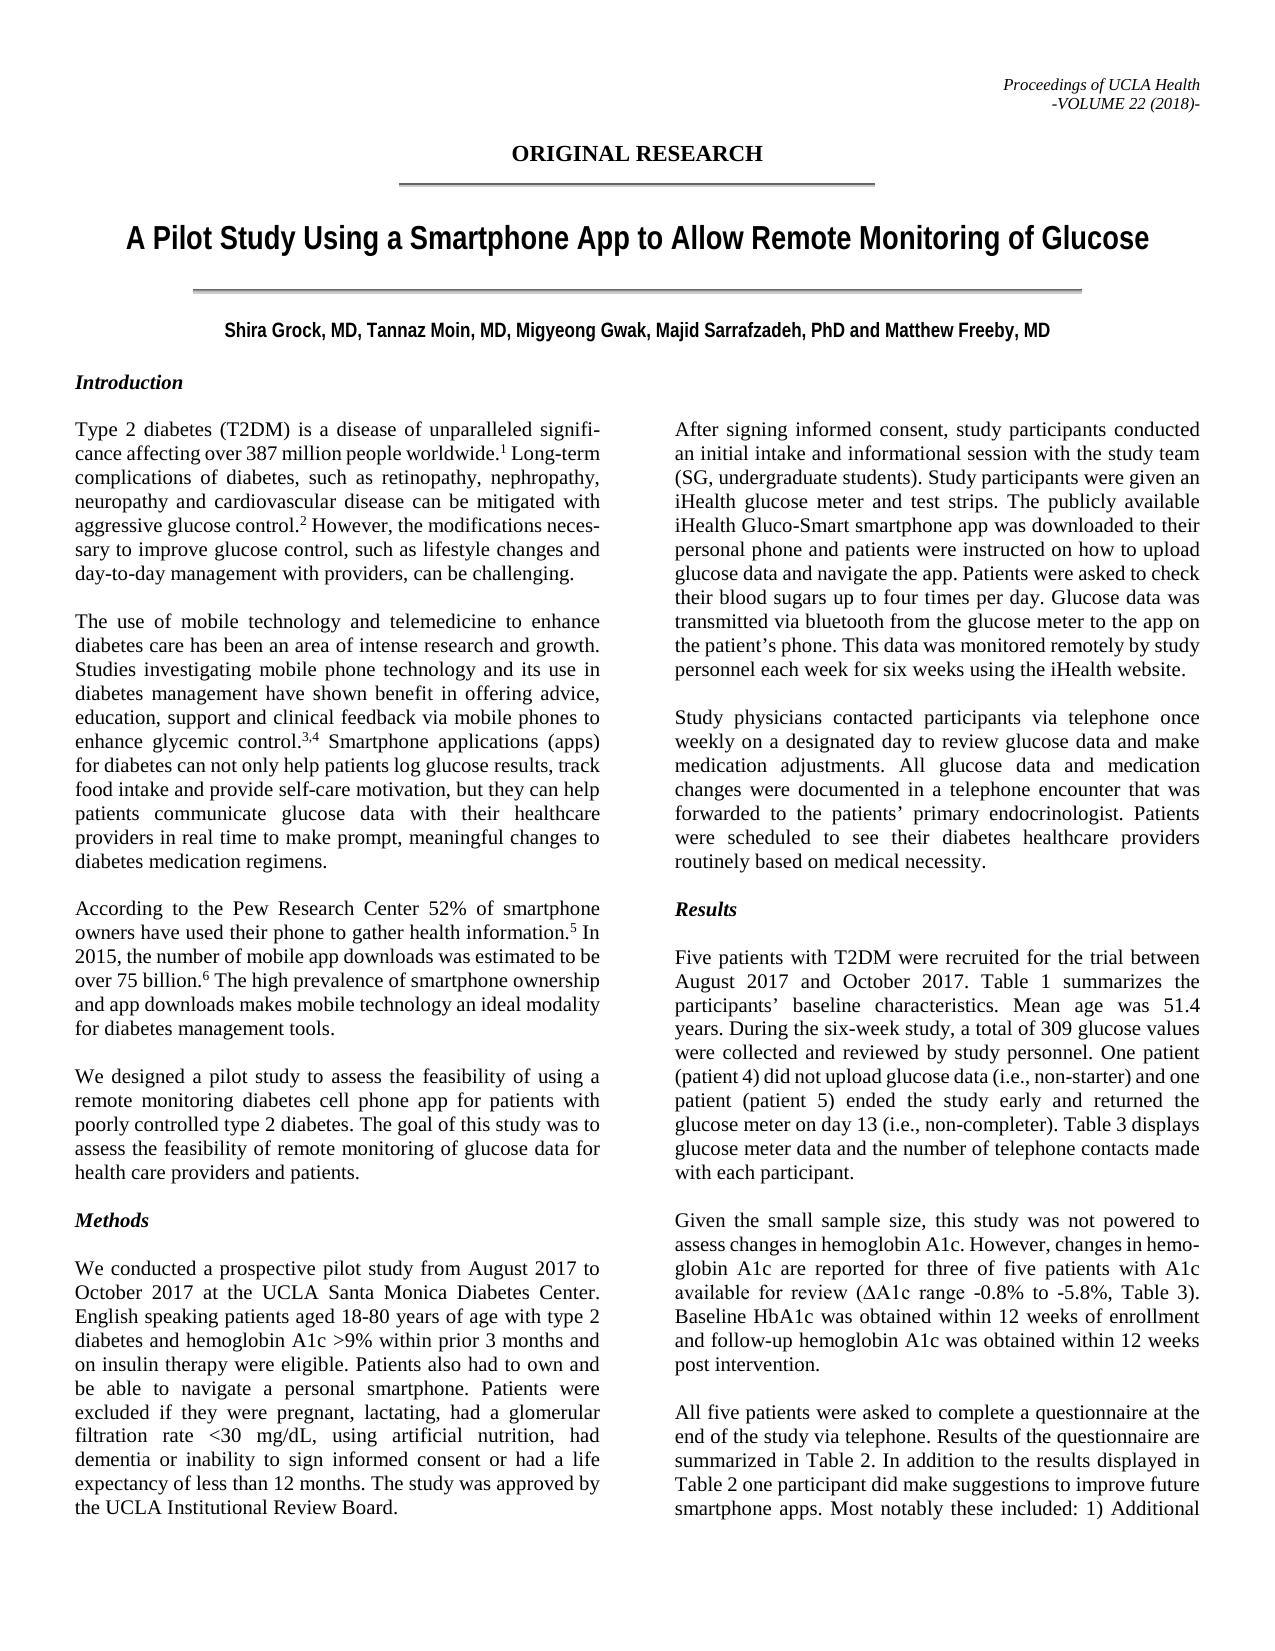 ihealth-gluco-smart-smartphone-app-user-manual.pdf